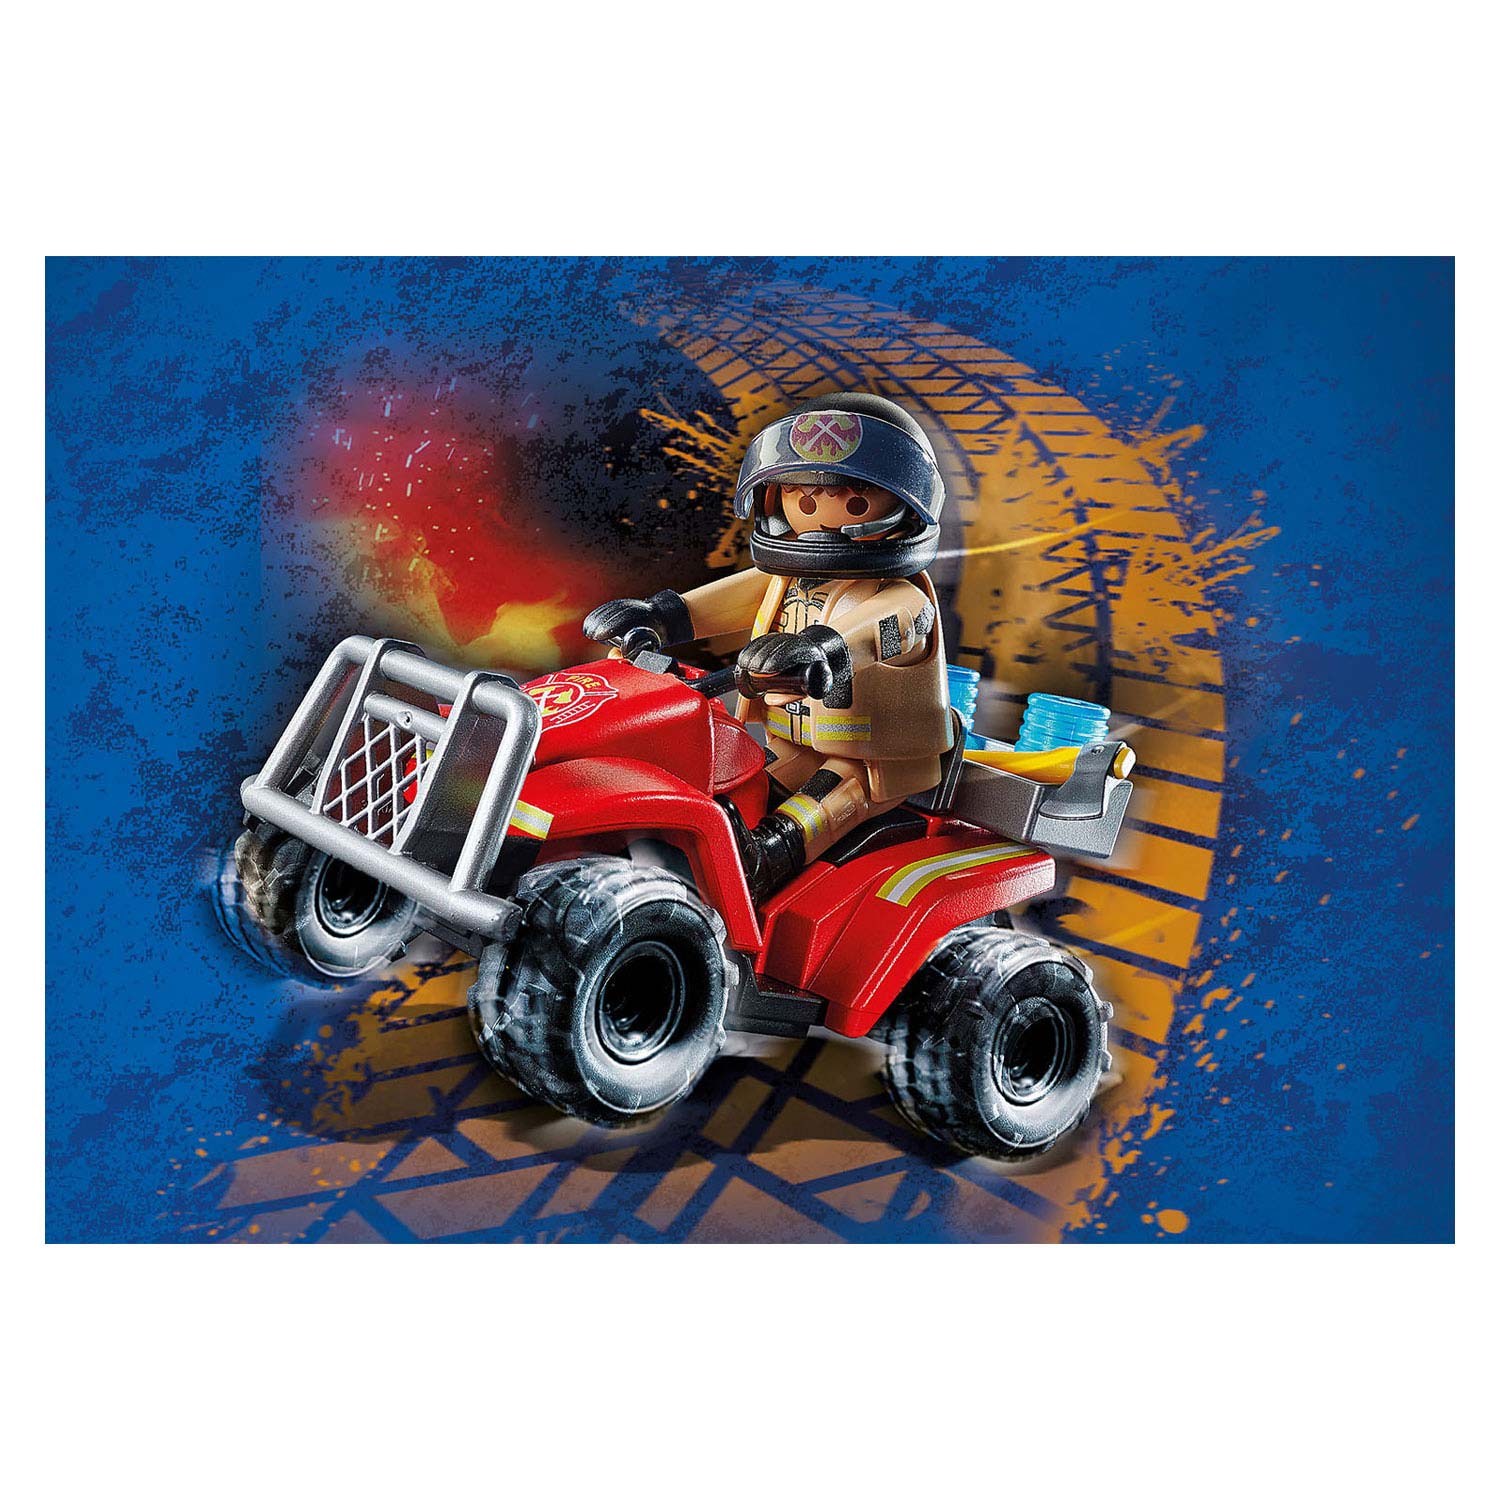 Playmobil City Action Brandweer Speed Quad - 71090